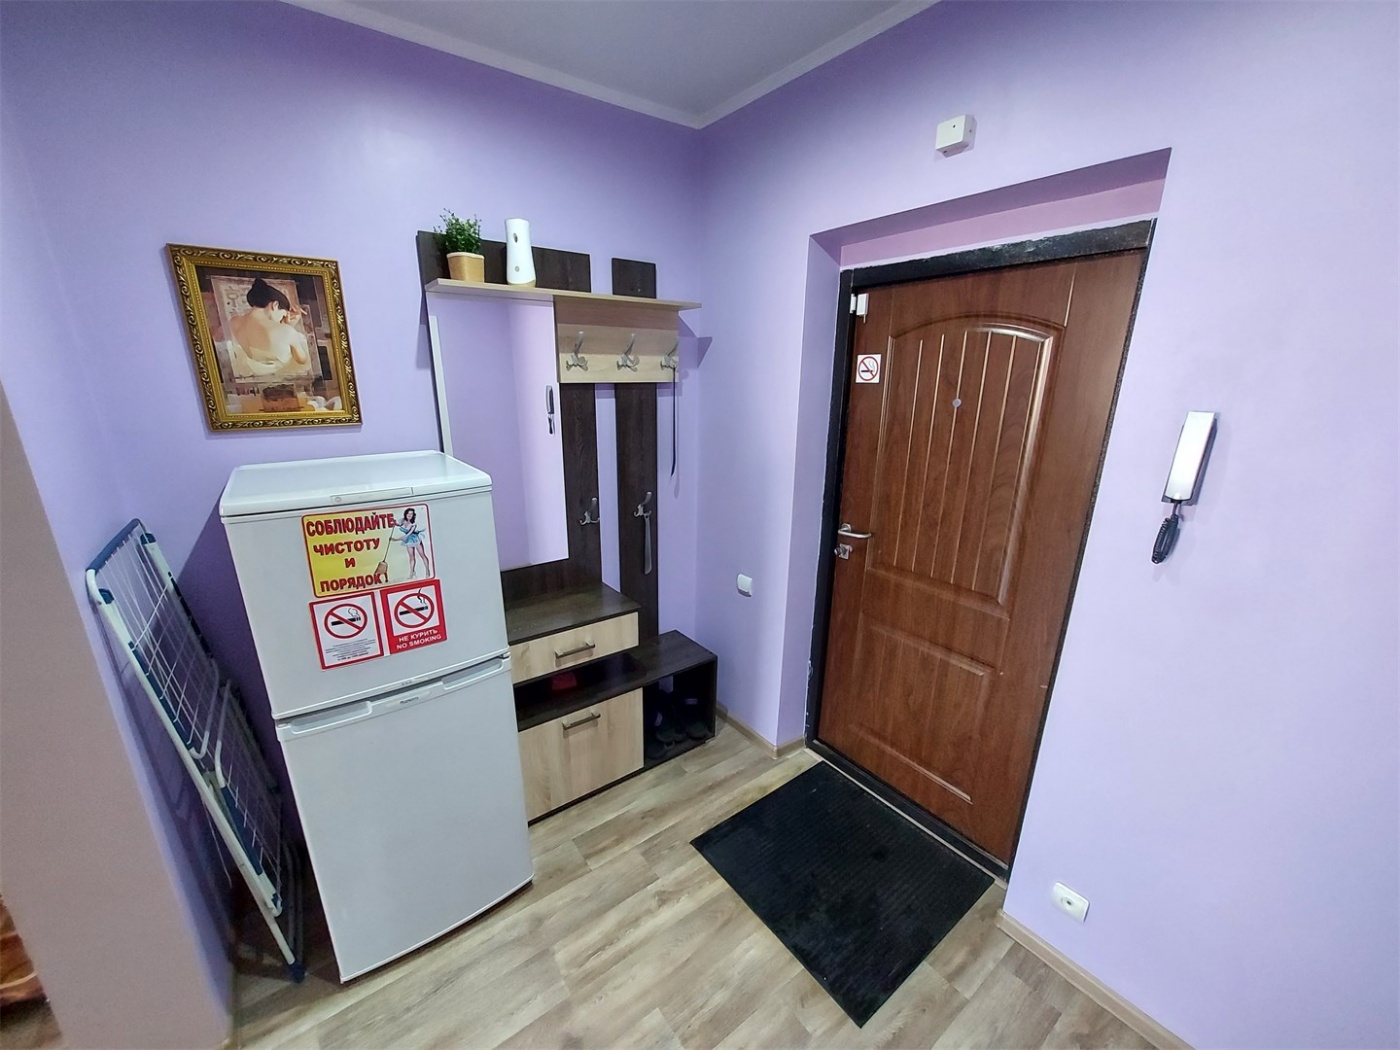  Апартаменты "Квартирное бюро " Республика Хакасия Комарова 9б, фото 9